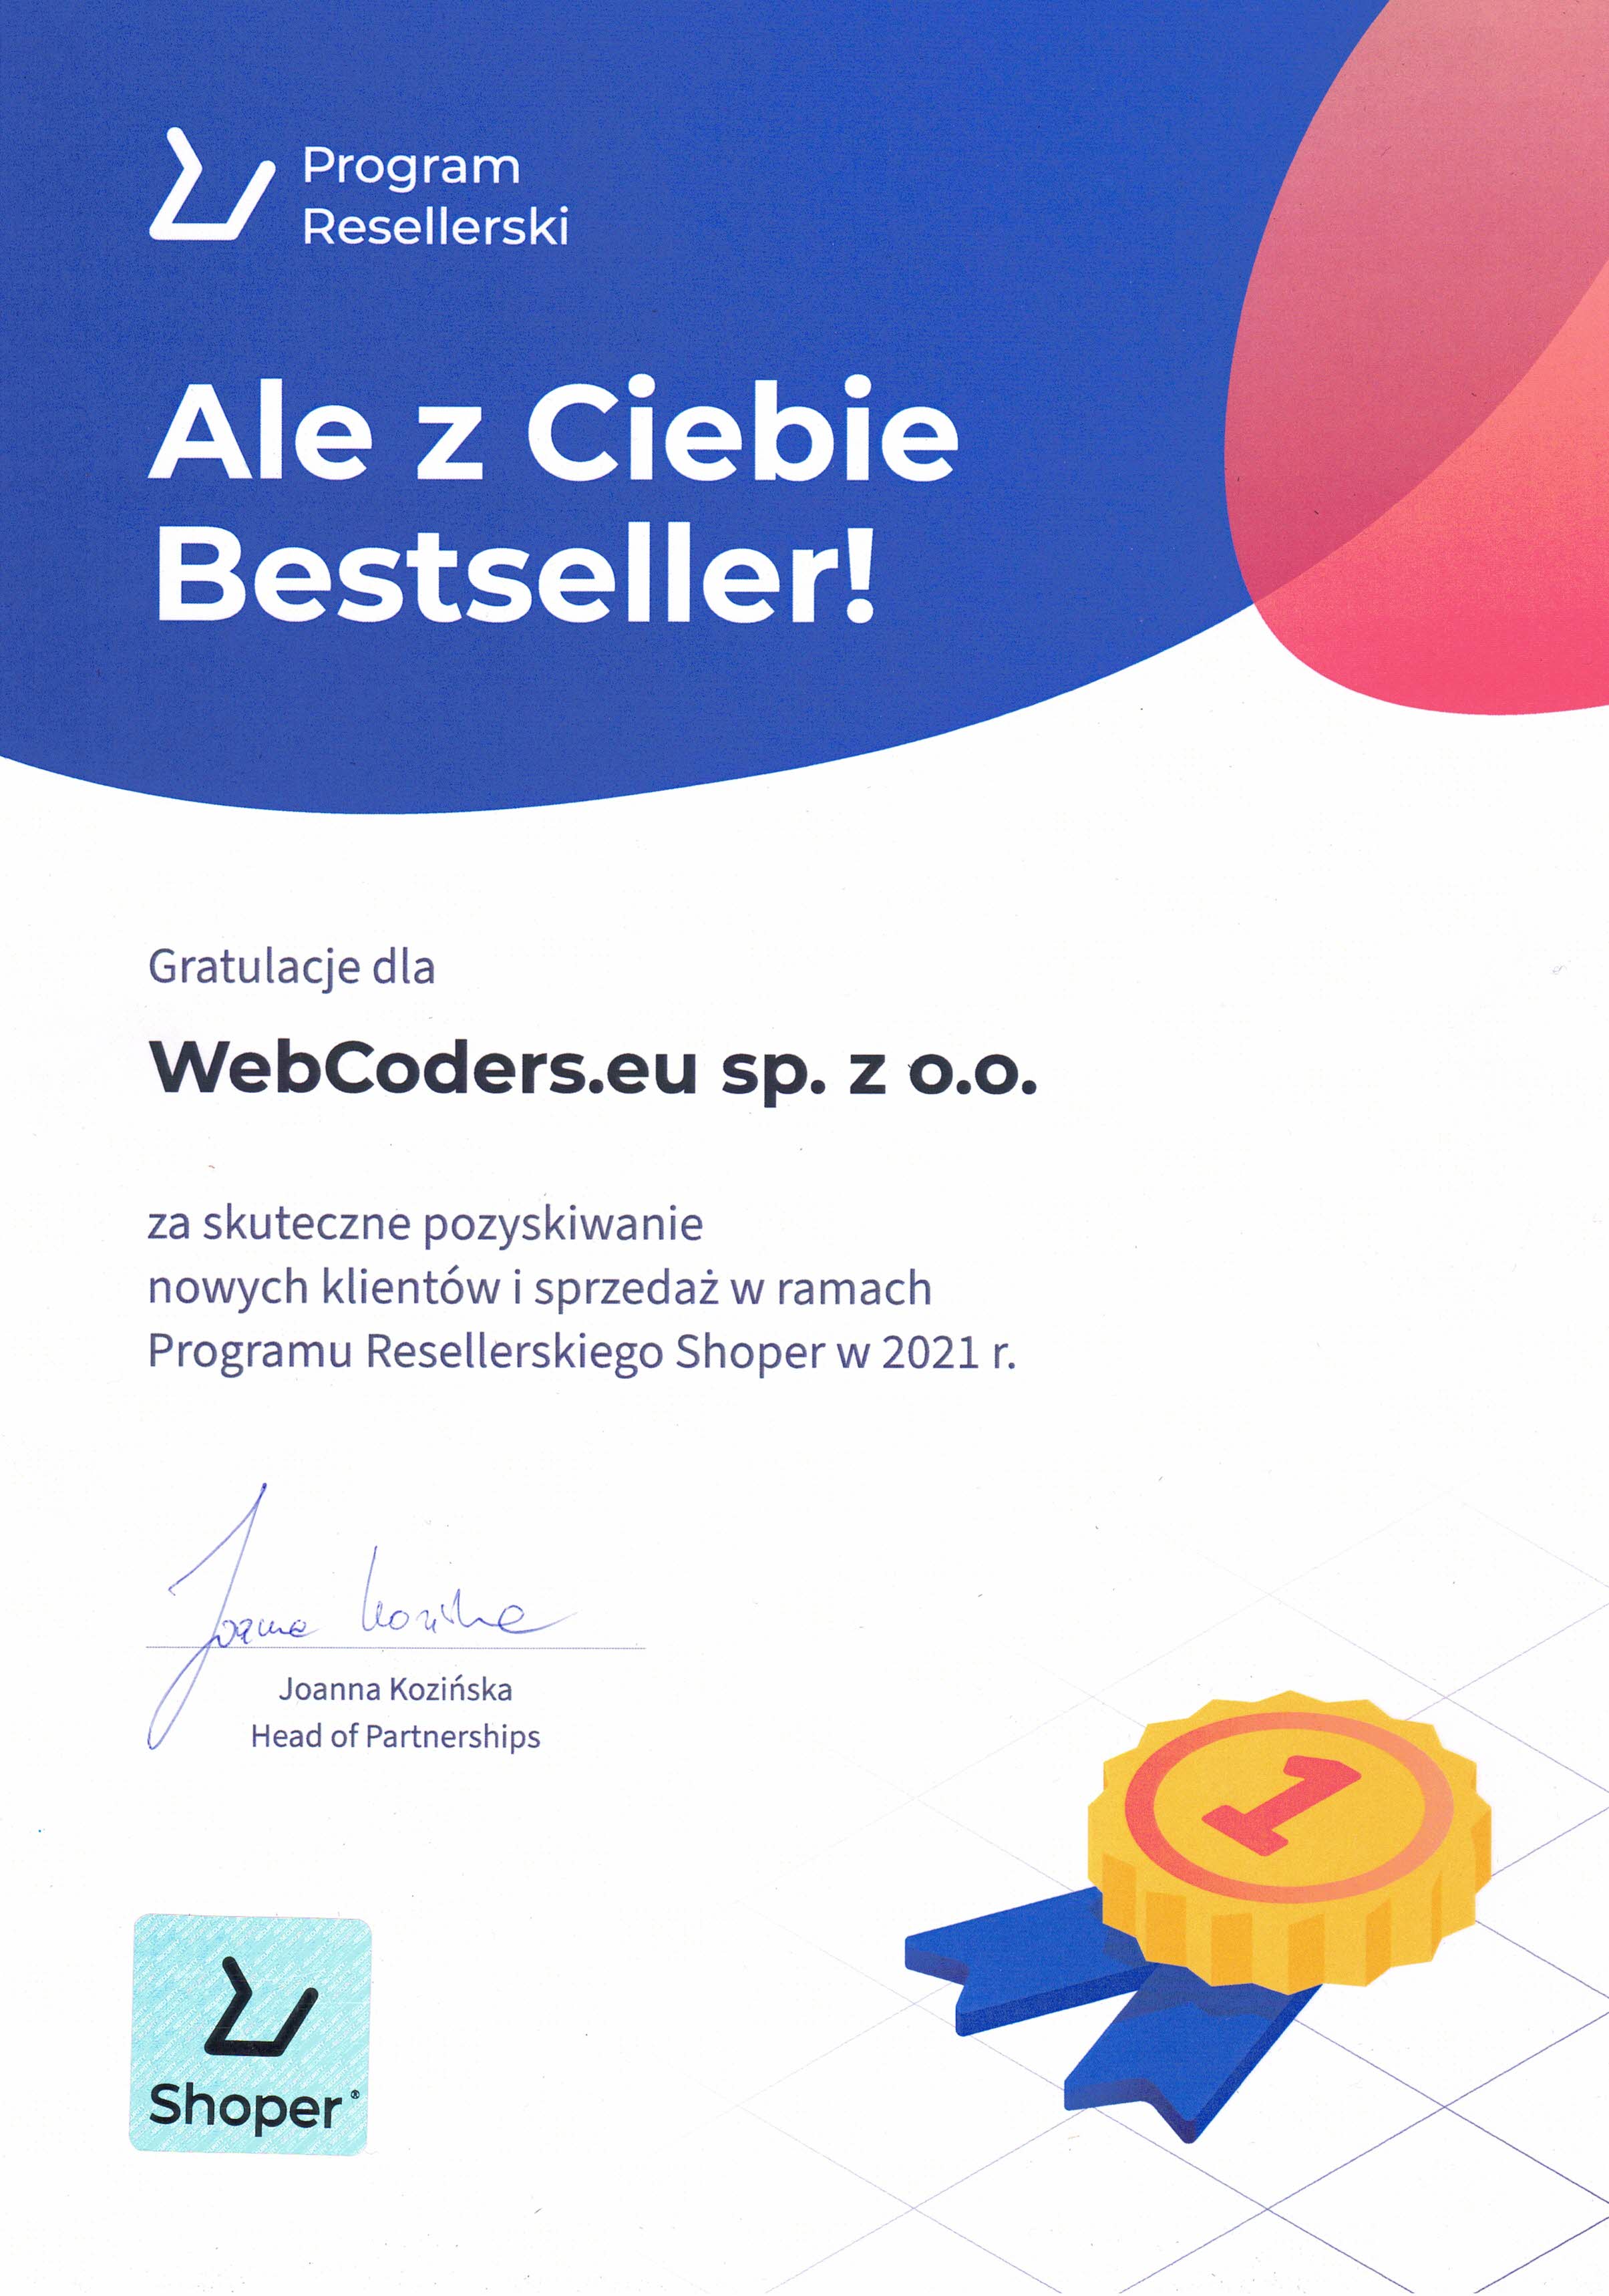 Program Resellerski Shoper - Gratulacje i wyróżnienie dla ShopGadget.pl od WebCoders.eu Sp. z o.o.